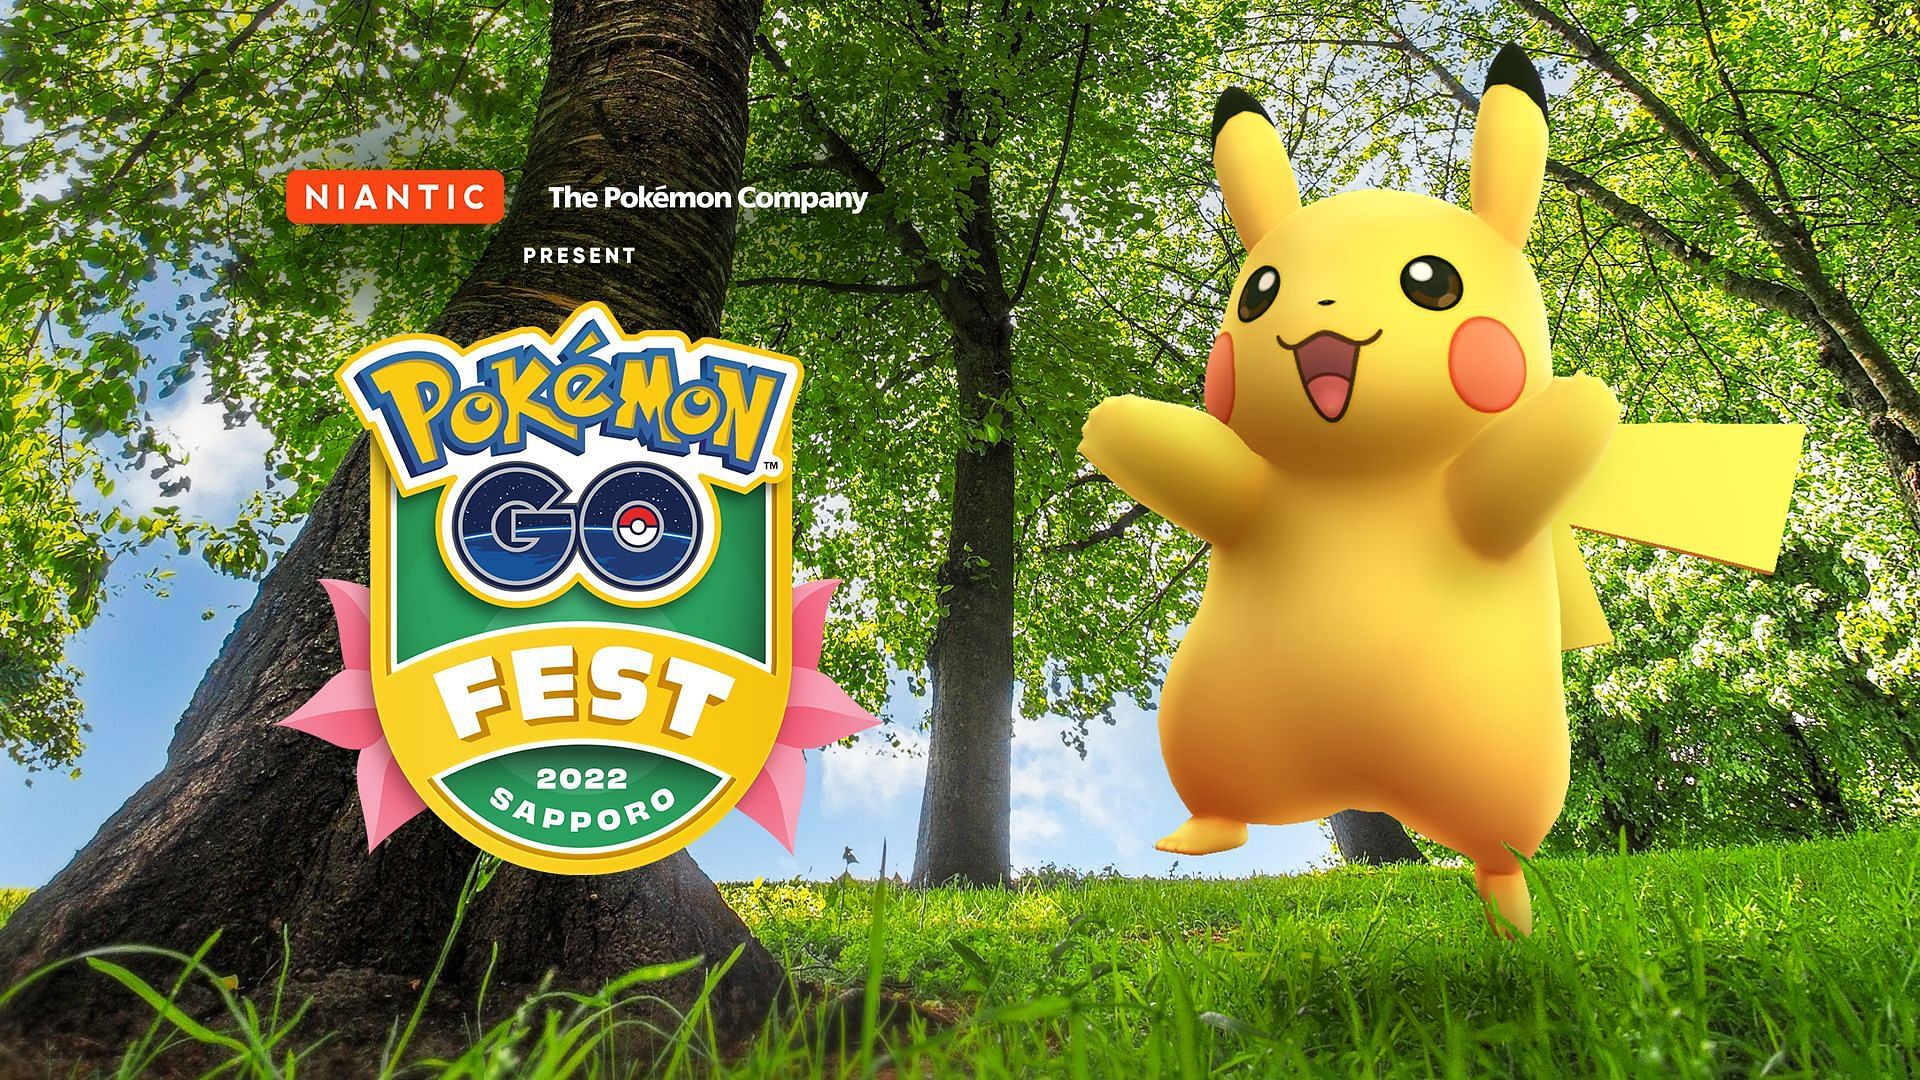 Promotional imagery for Pokemon GO Fest 2022 (Image via Niantic)